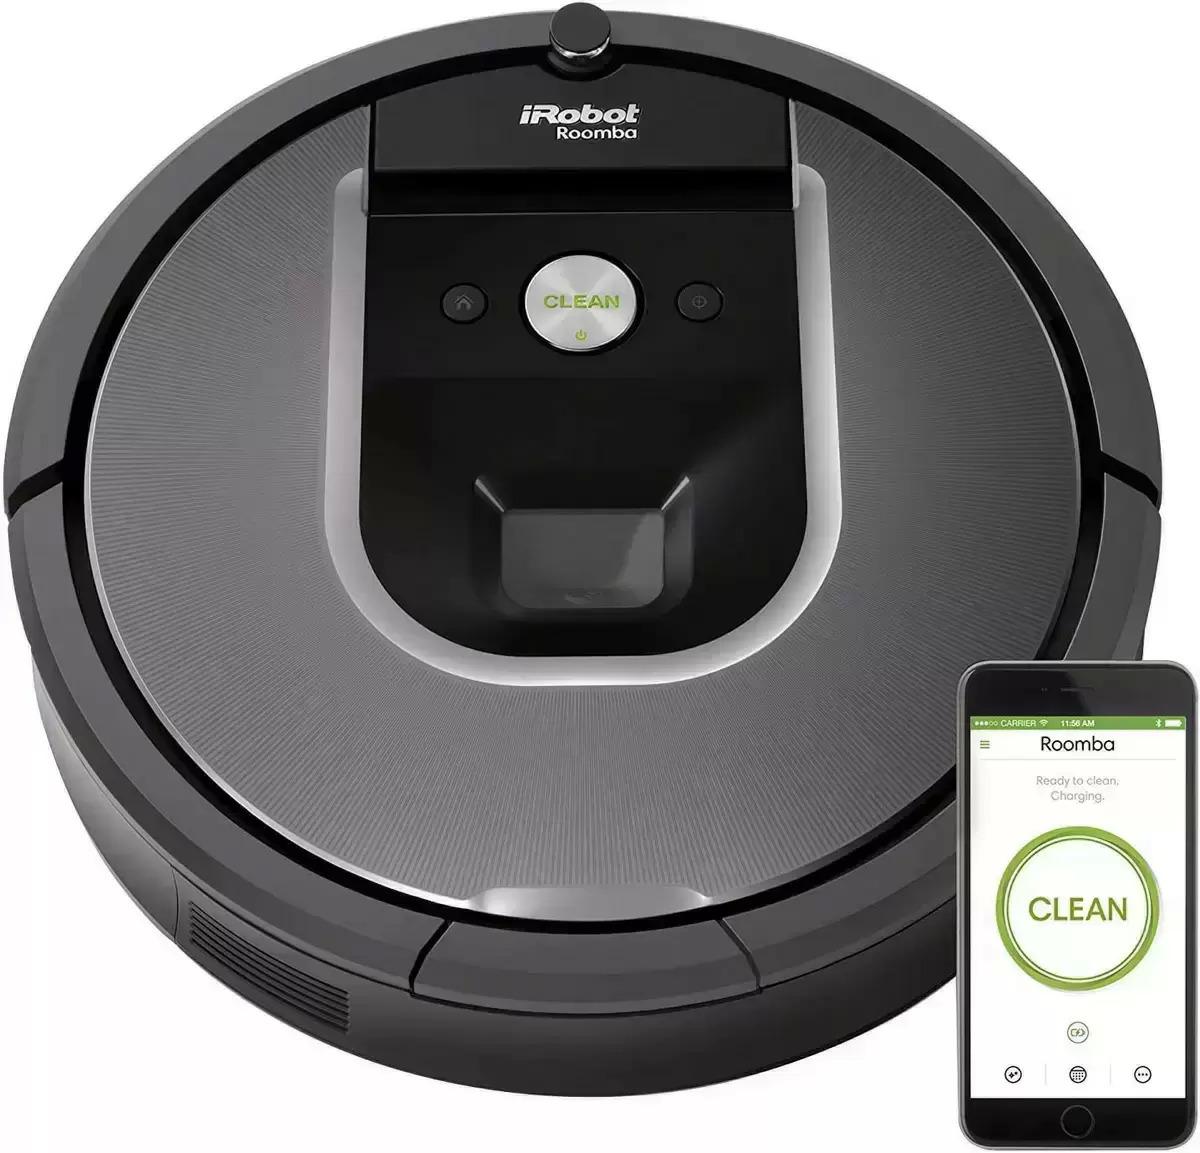 iRobot Roomba 960 Robot Vacuum for $149.99 Shipped